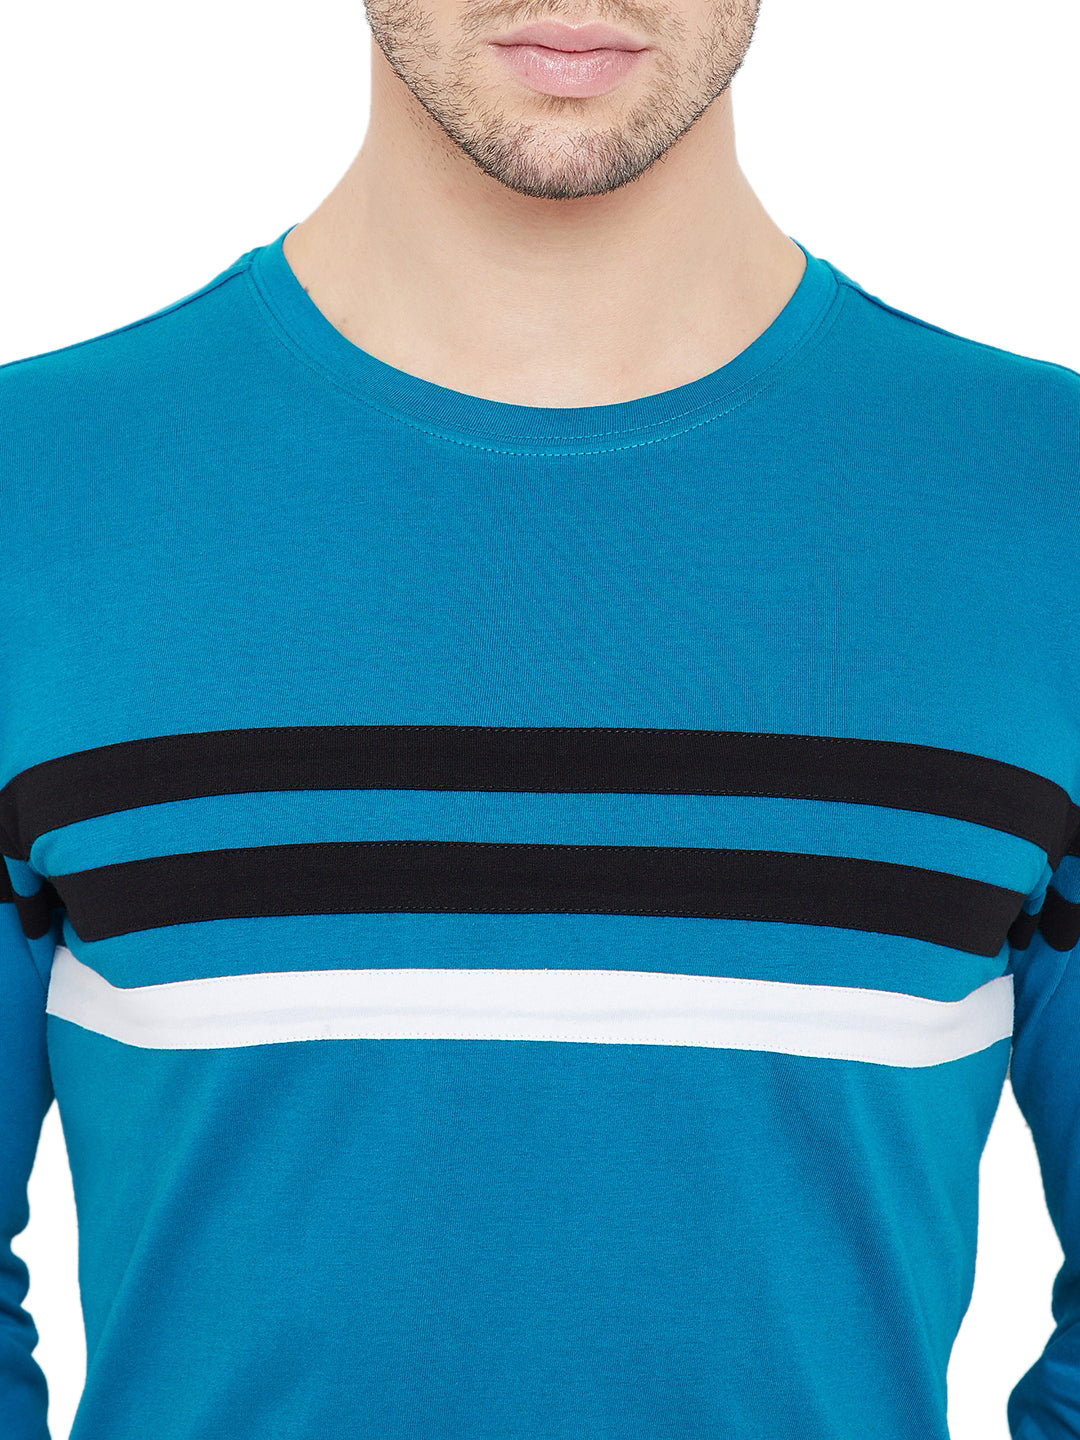 Turquoise/Black/White Men Full Sleeves Round Neck Color Block T-Shirt